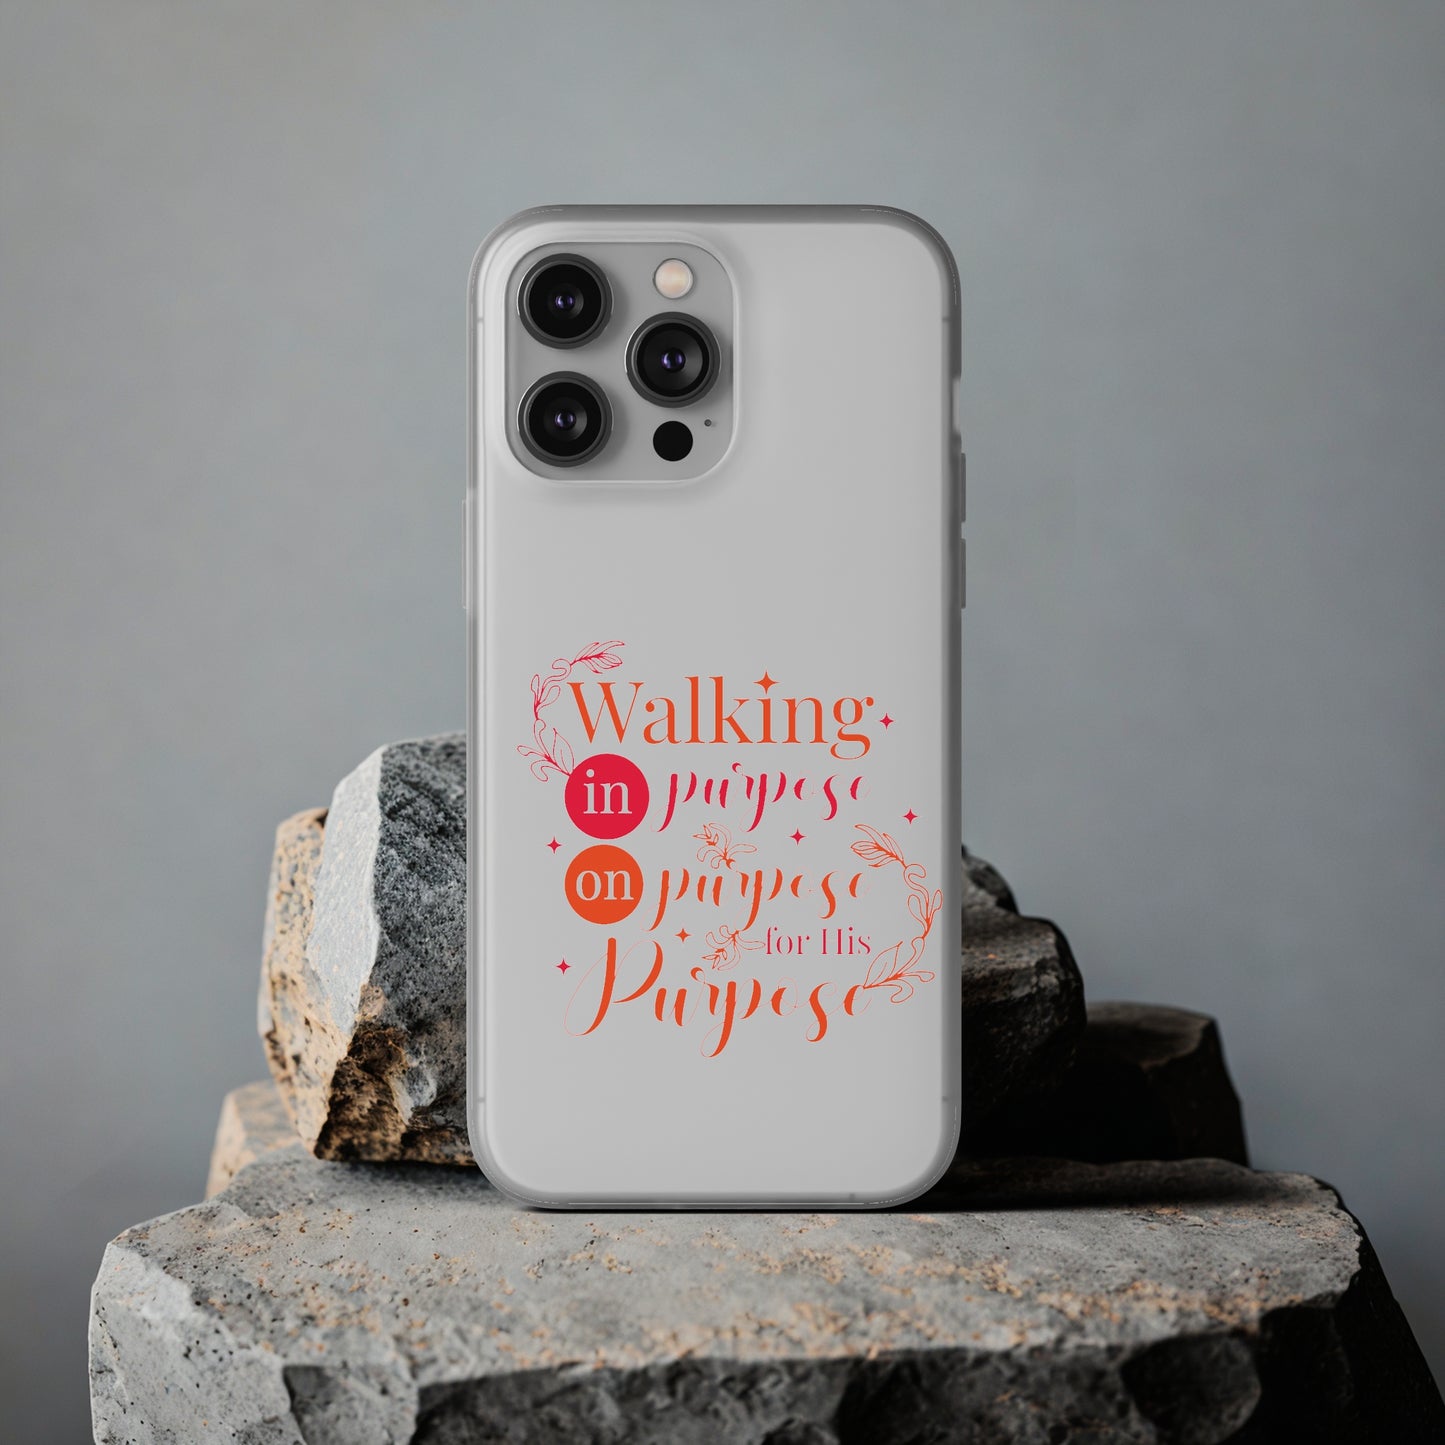 Walking In Purpose On Purpose For His Purpose  Flexi Phone Case